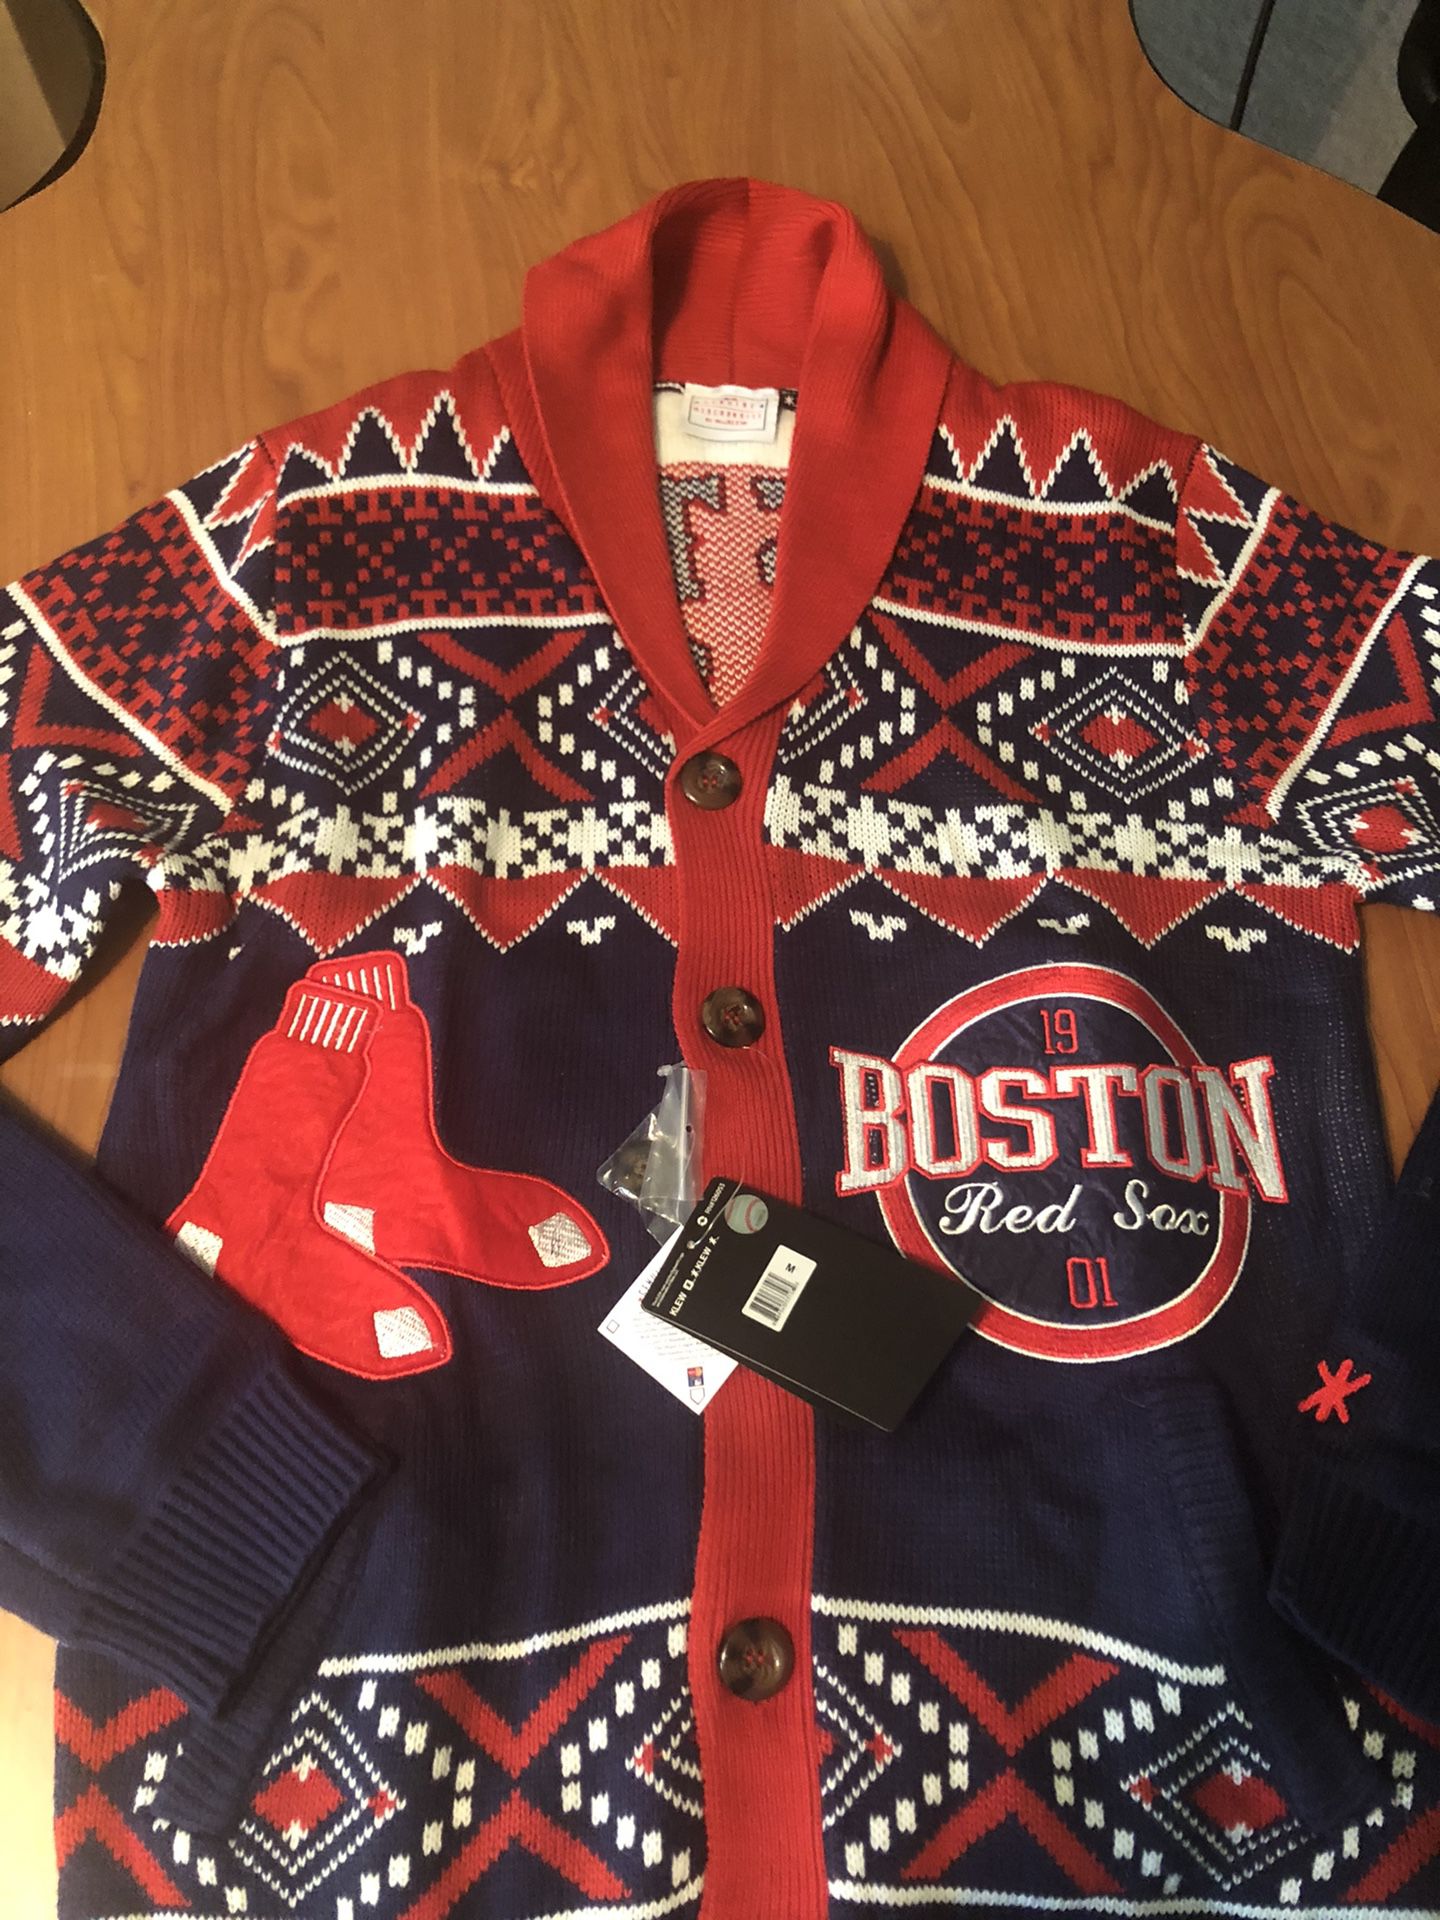 New Klew Boston Red Sox ugly sweater cardigan. Medium